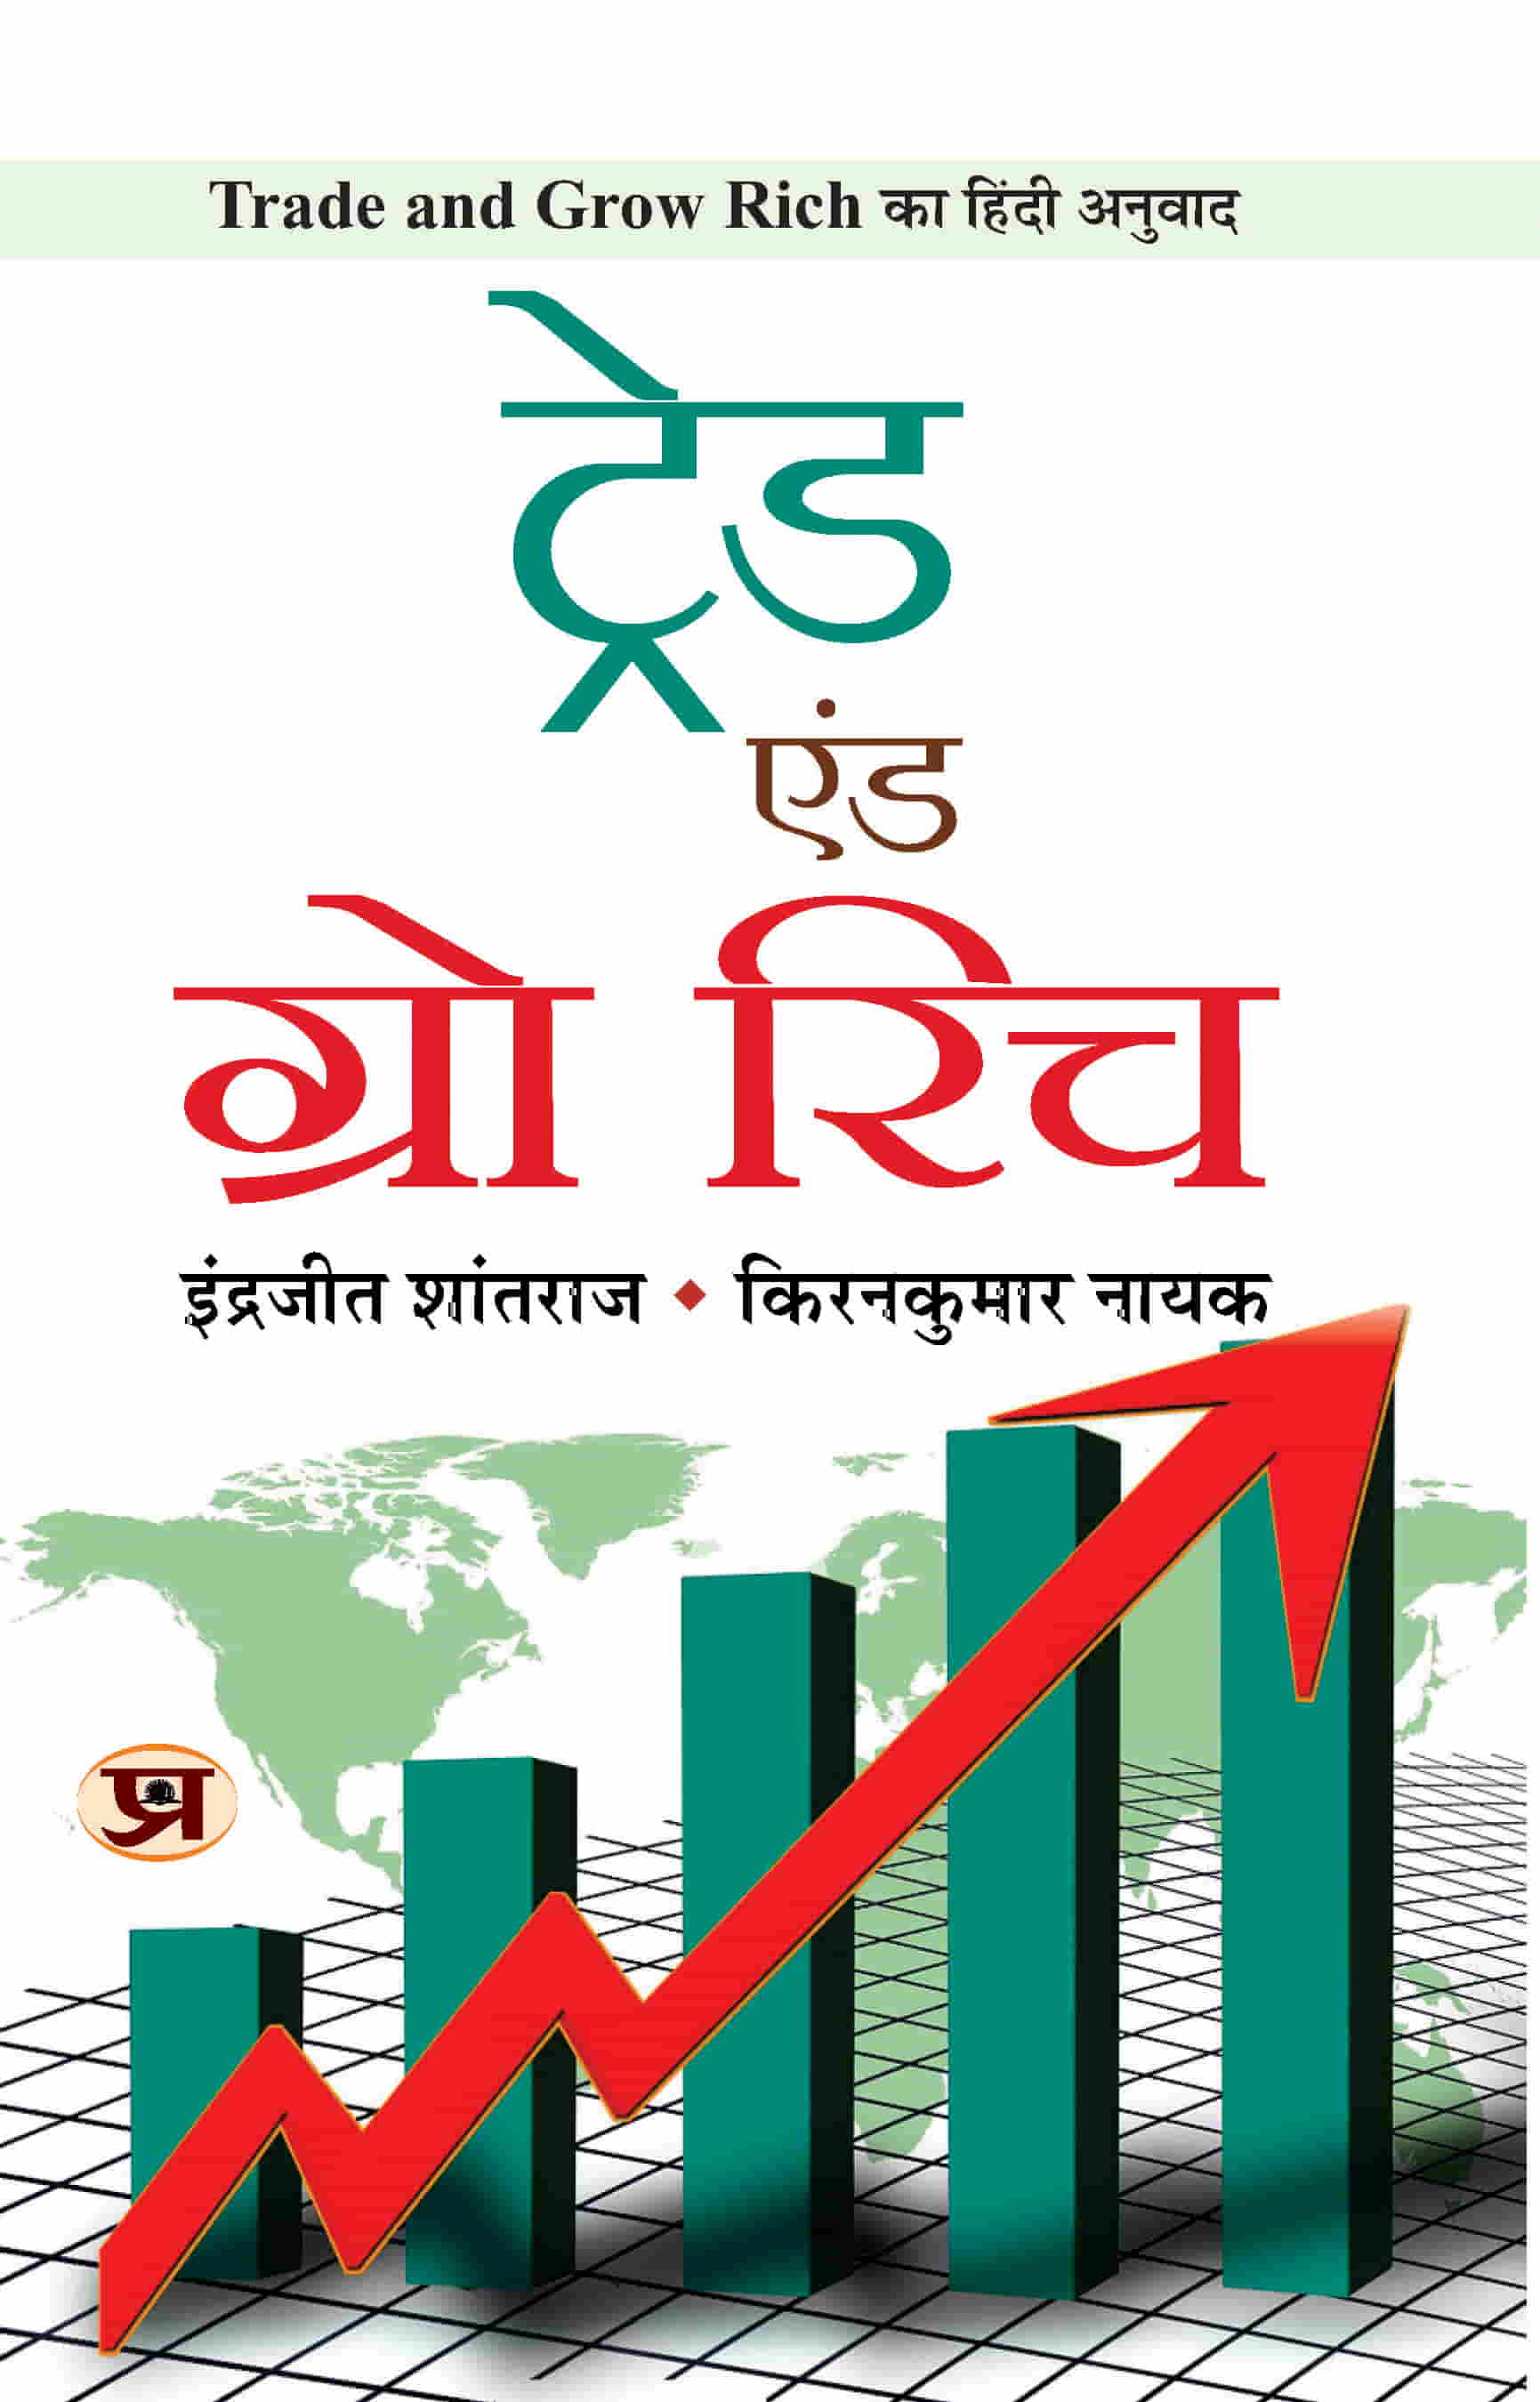 Trade and Grow Rich (Hindi Translation)